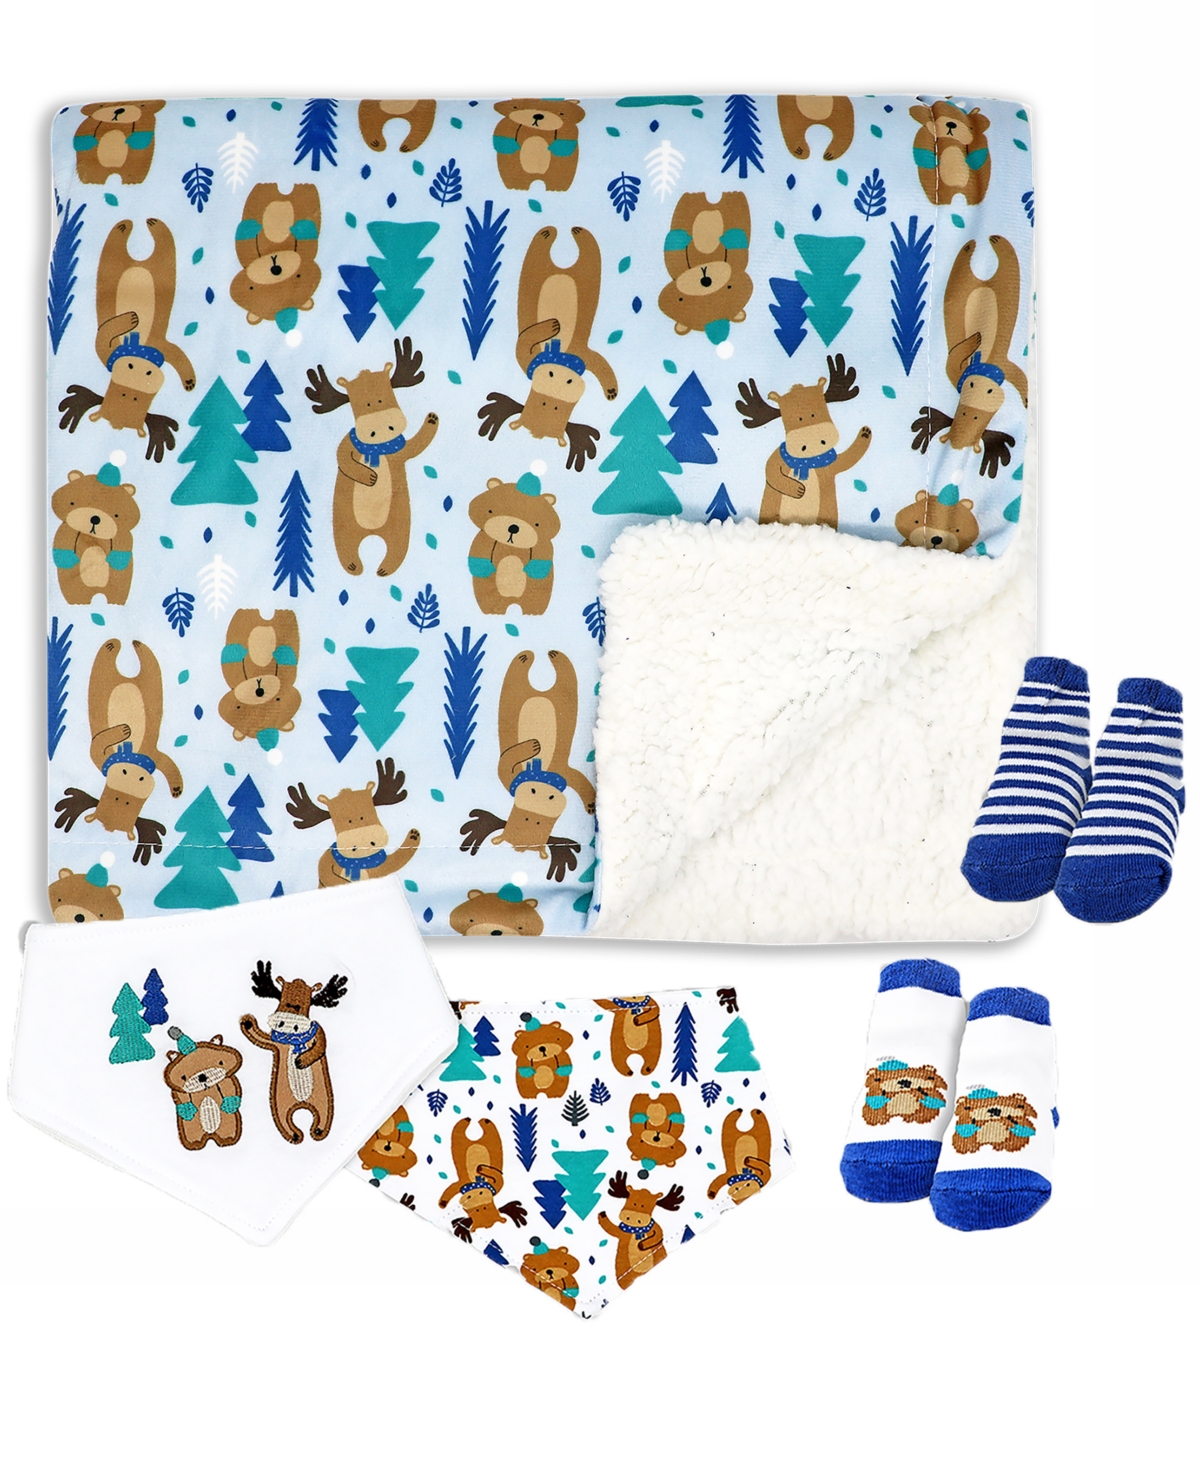 Baby Mode Baby Boys Minky Blanket, Bibs And Socks, 5 Piece Set In Blue Moose